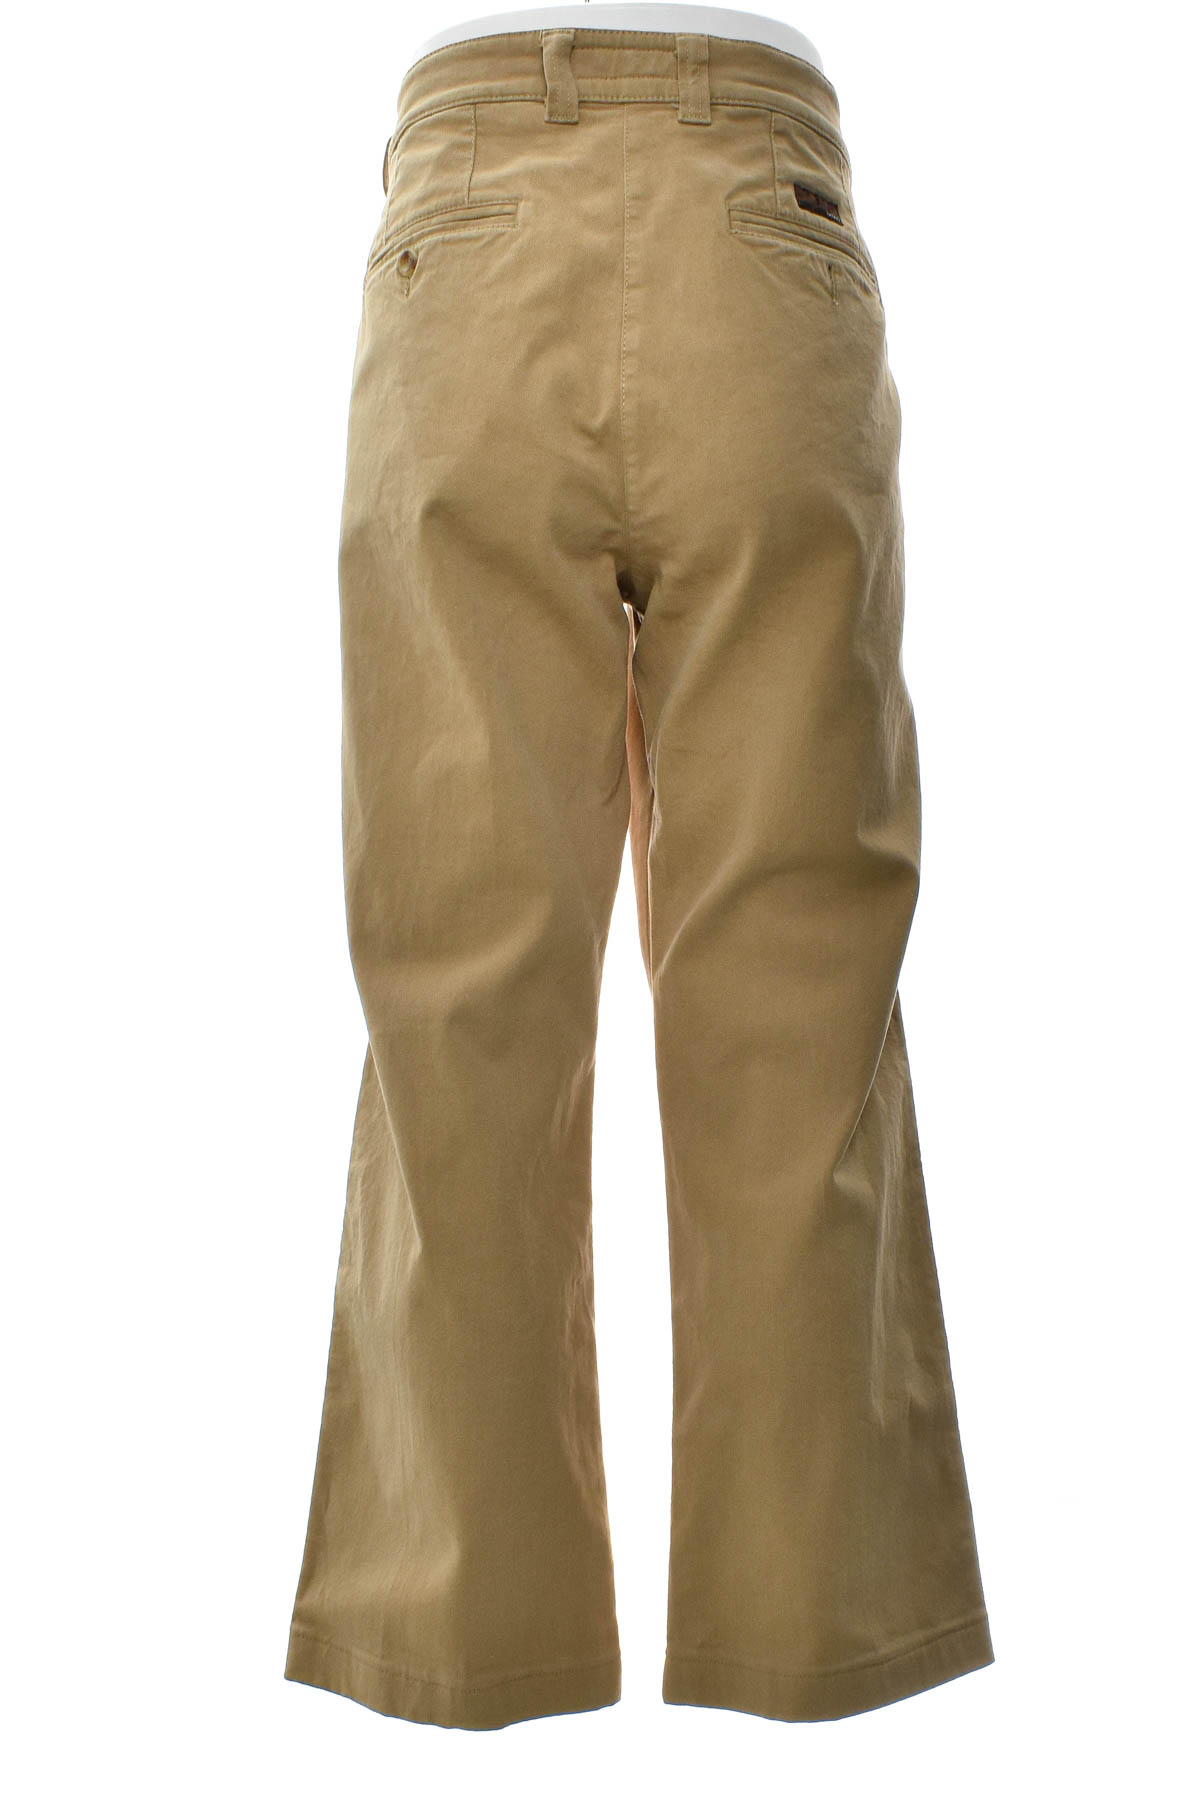 Men's trousers - MAC - 1